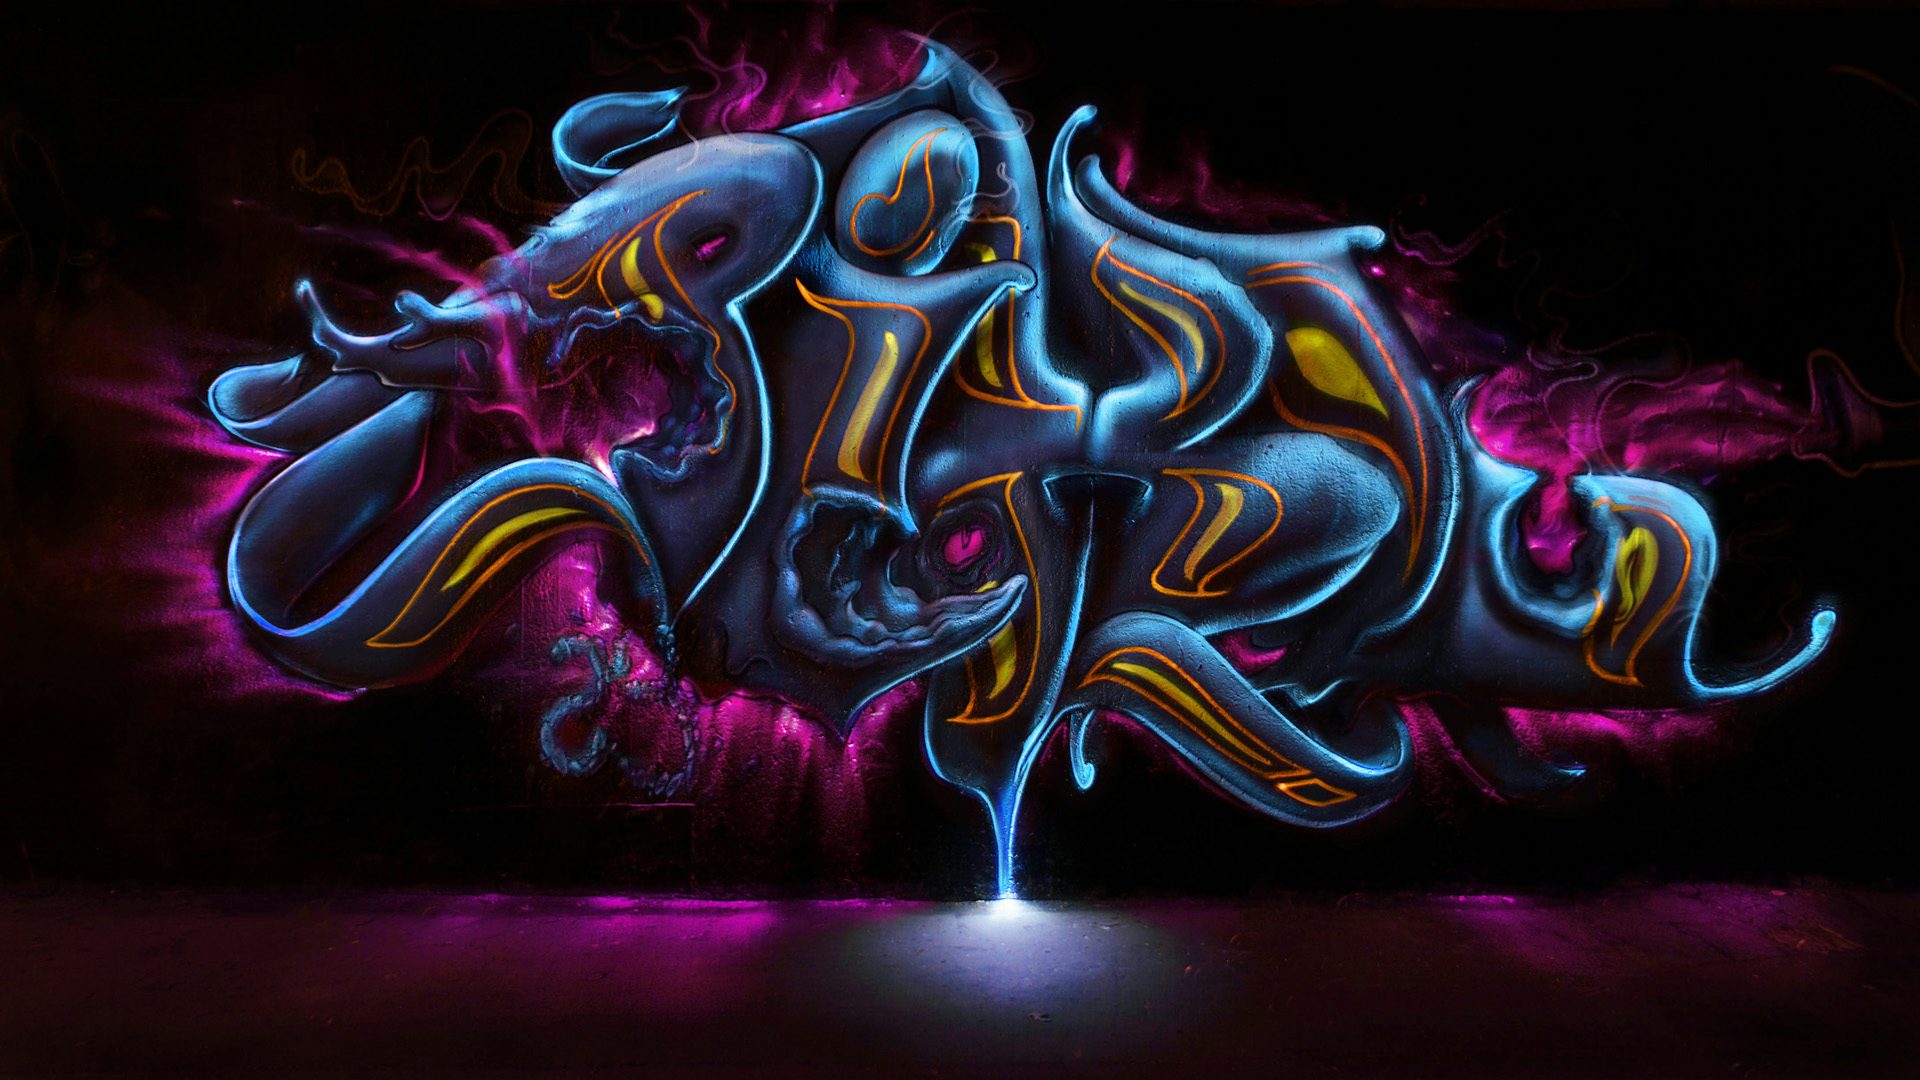 Light Brushing Graffiti by Florian Krause